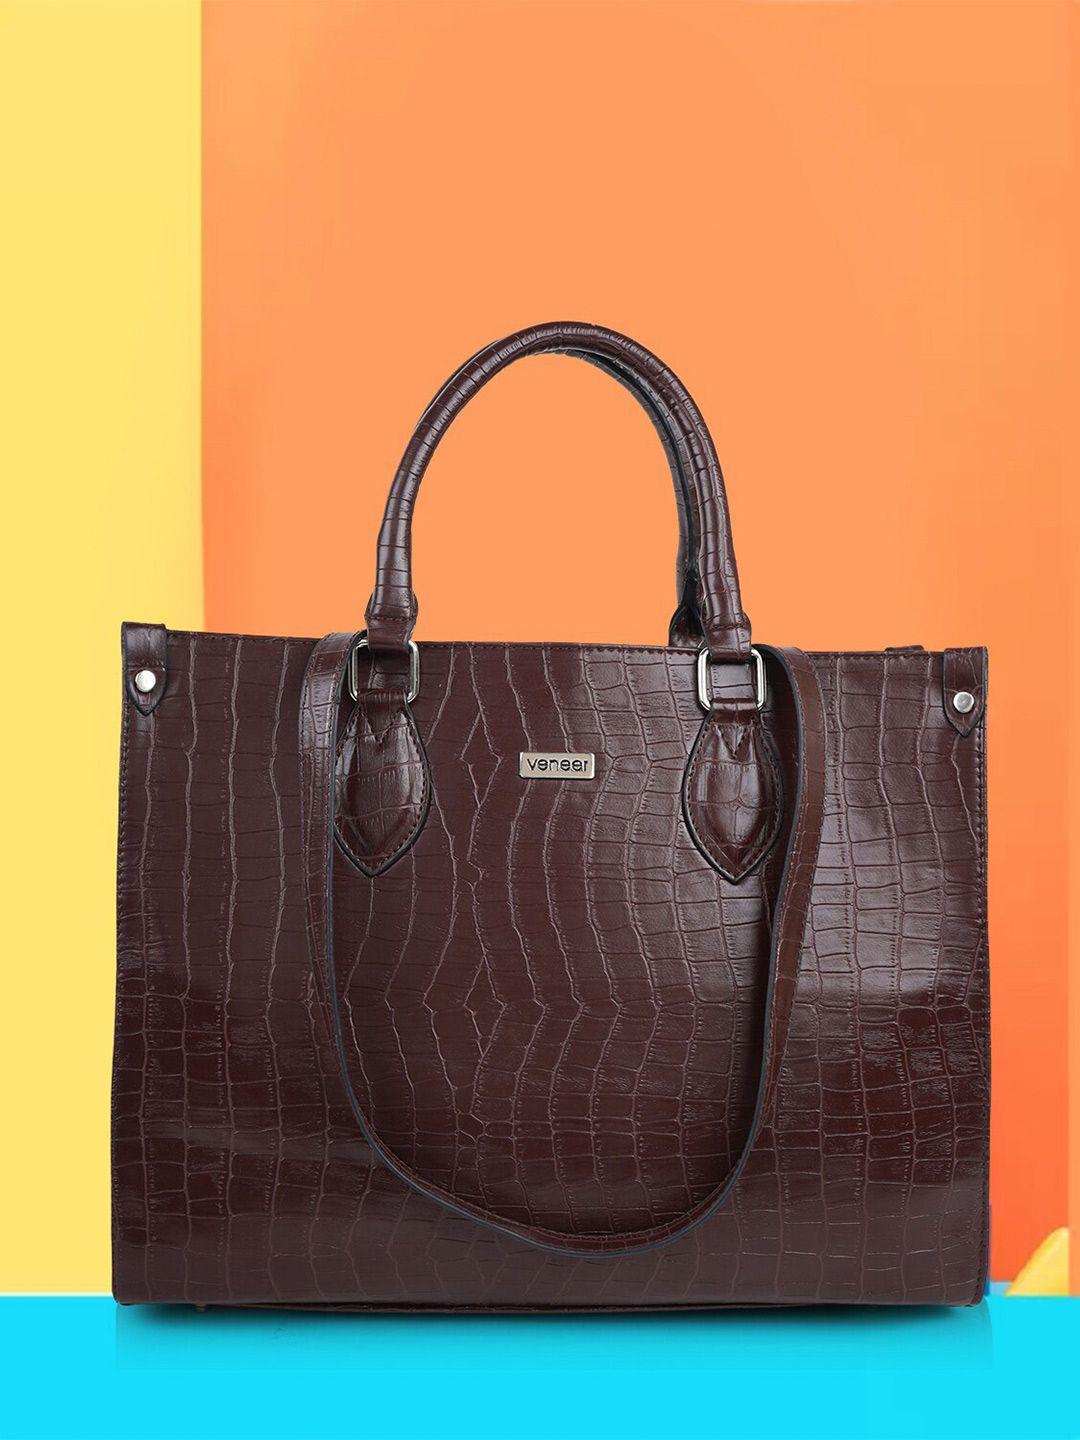 veneer textured classy tote handbag